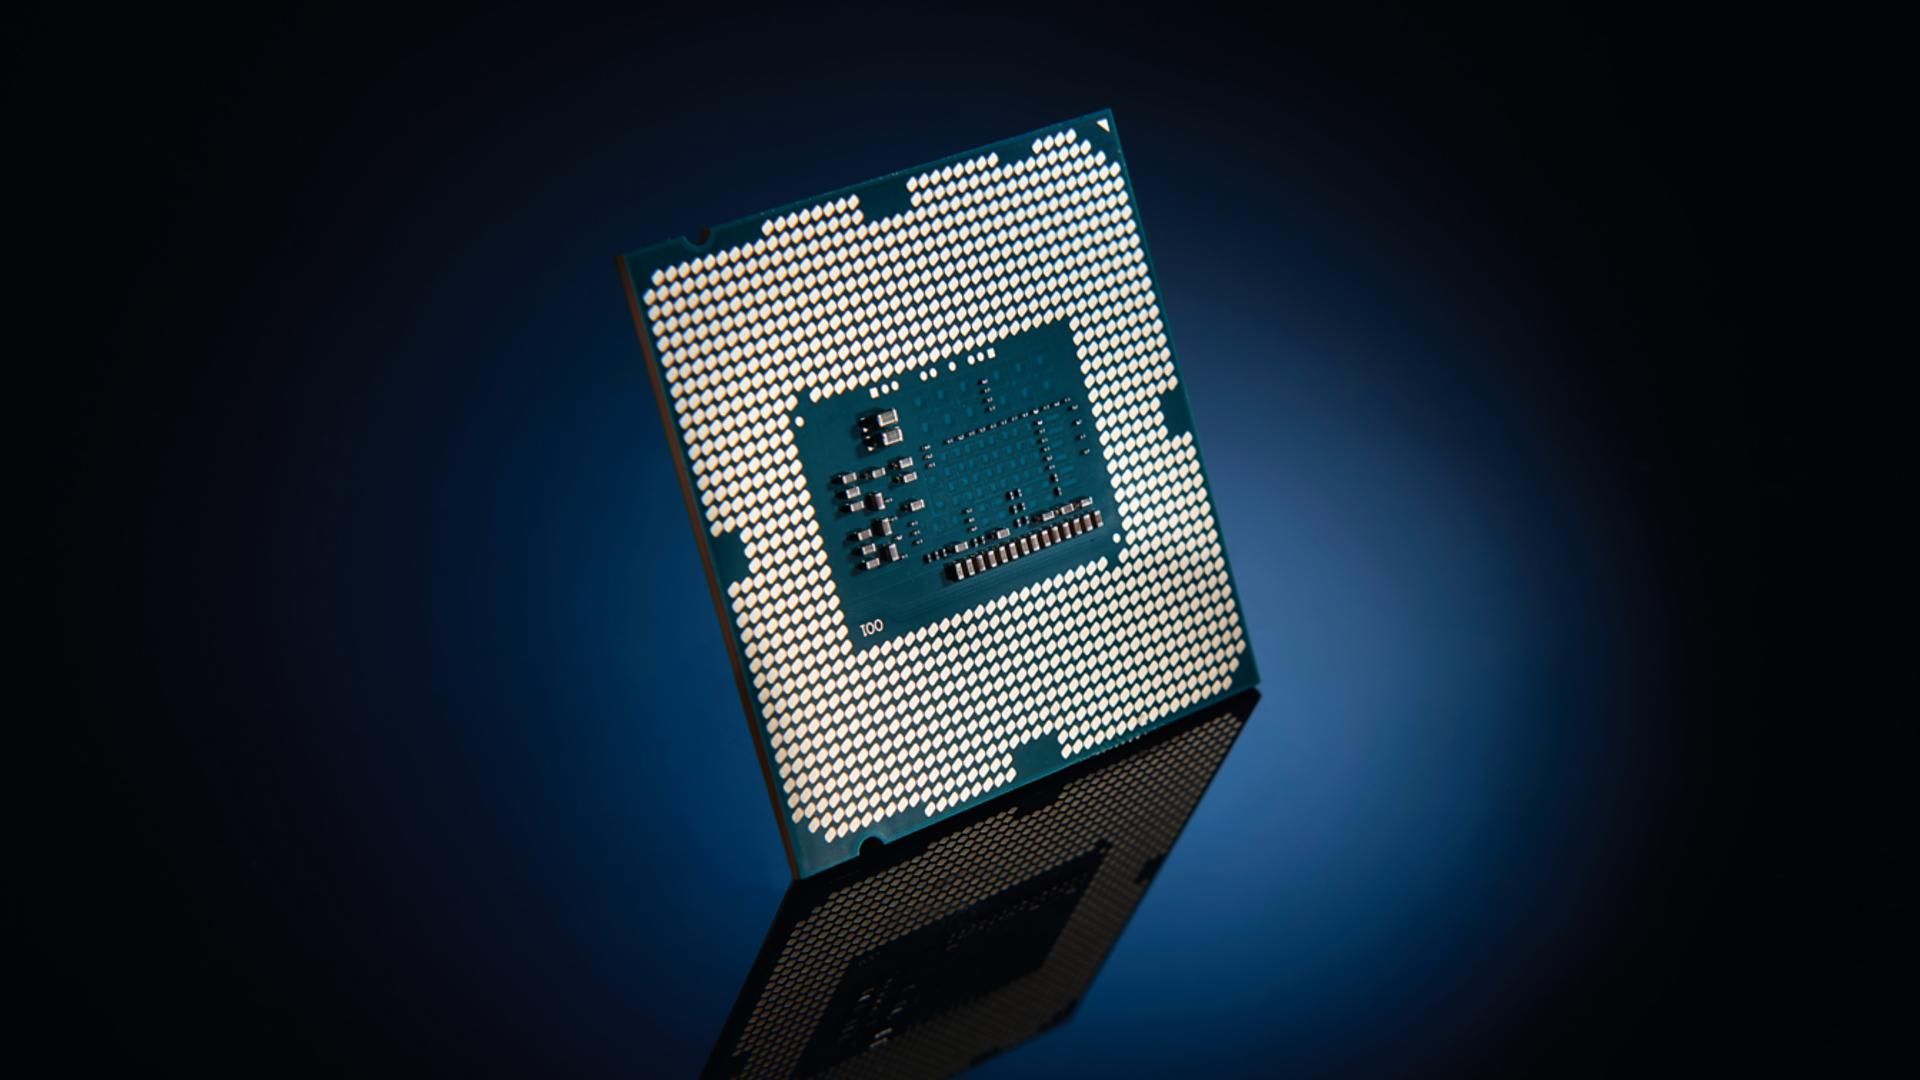 Intel Core I9 11900K Rocket Lake S Desktop Flagship 8 Core CPU Spotted